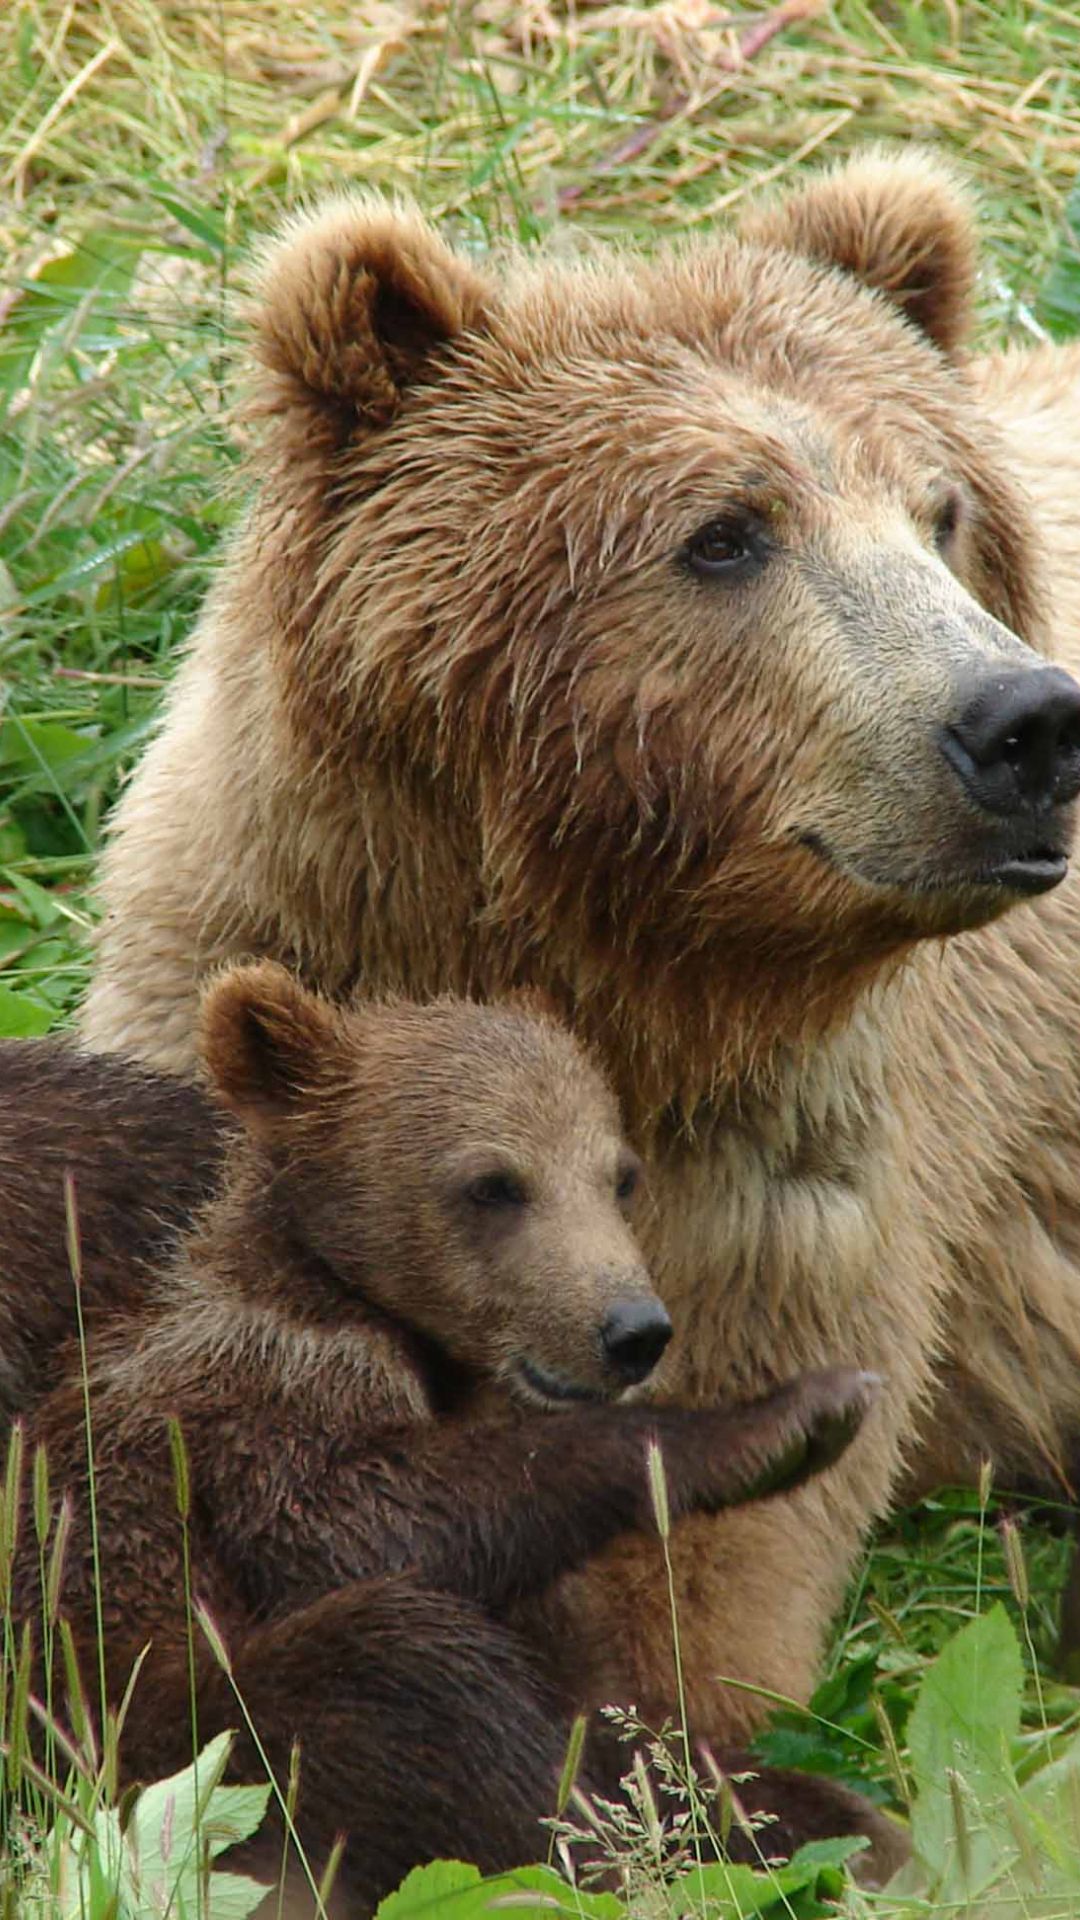 Mama Bear and Cubs Wallpaper Mural